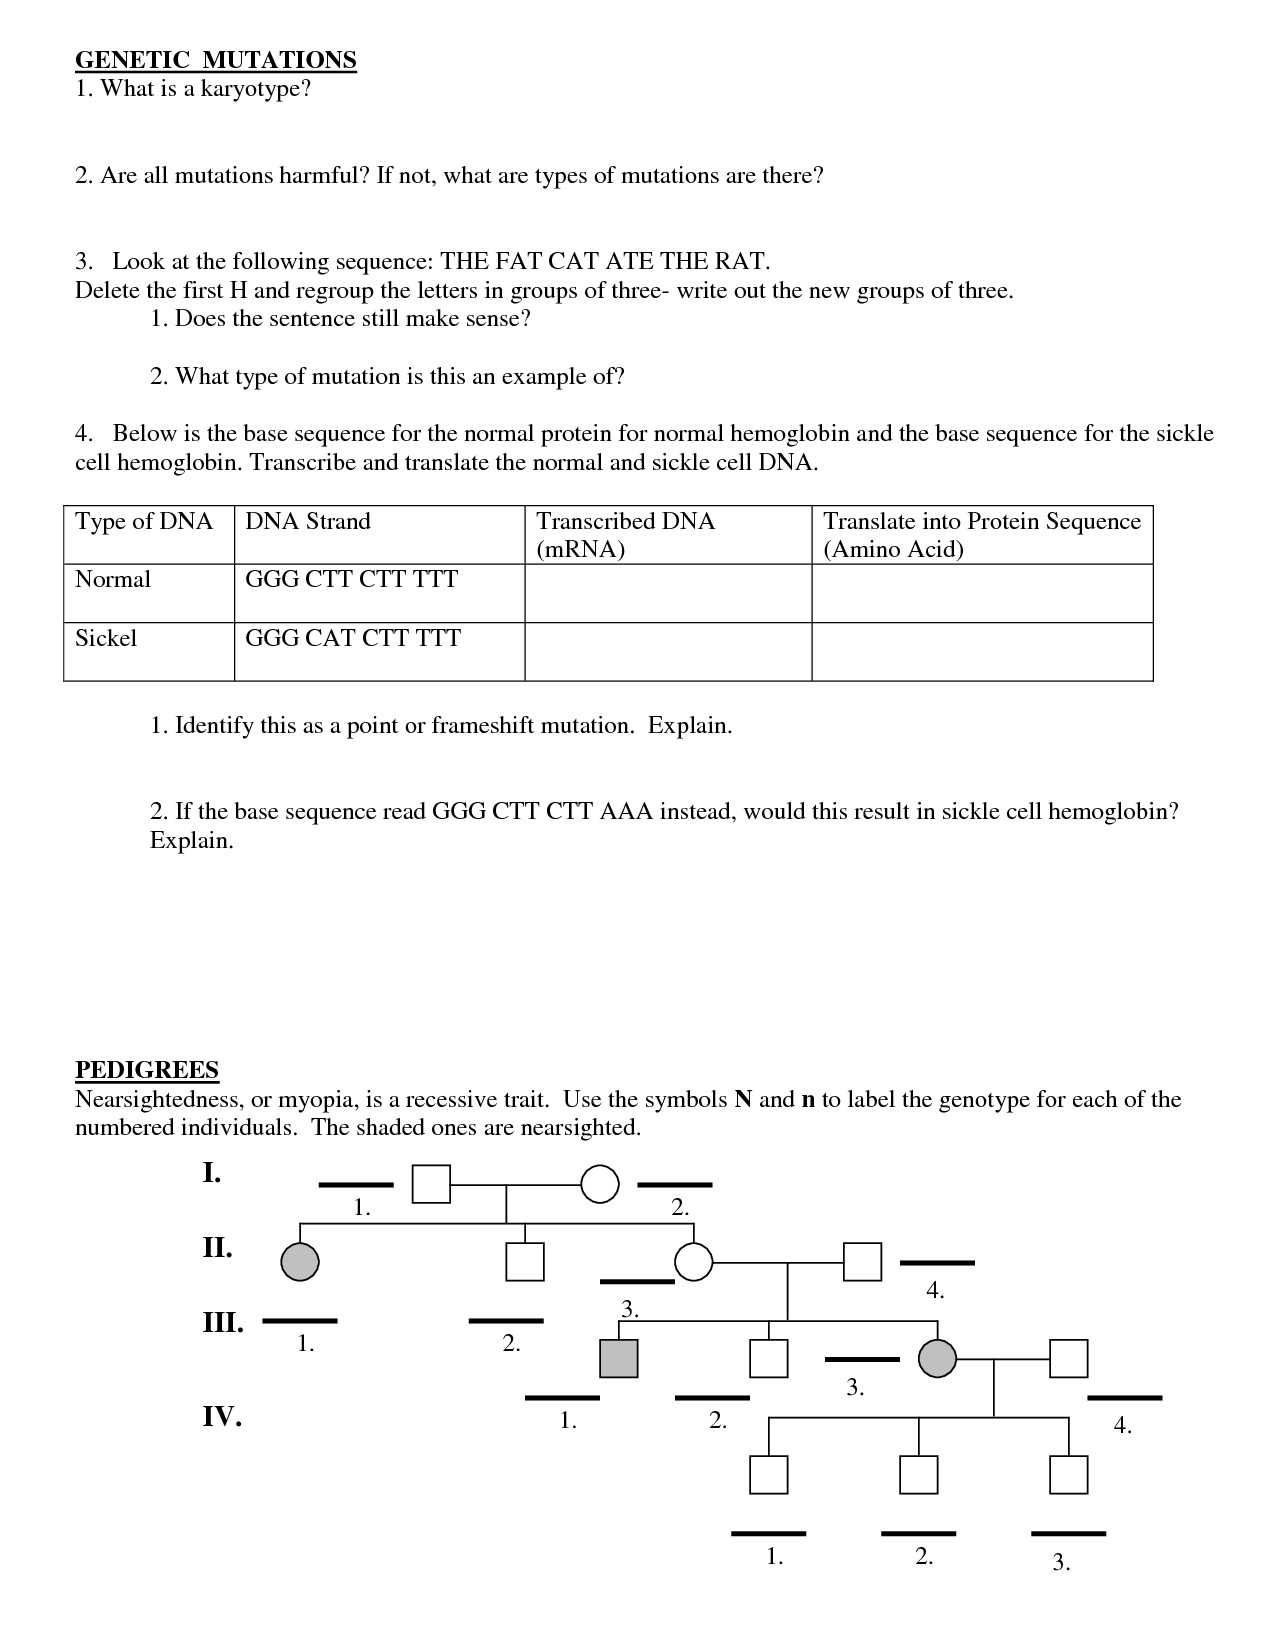 Gene Mutations Worksheet Answer Key Also Gene Mutations Worksheet Bb695d312a9b Battk